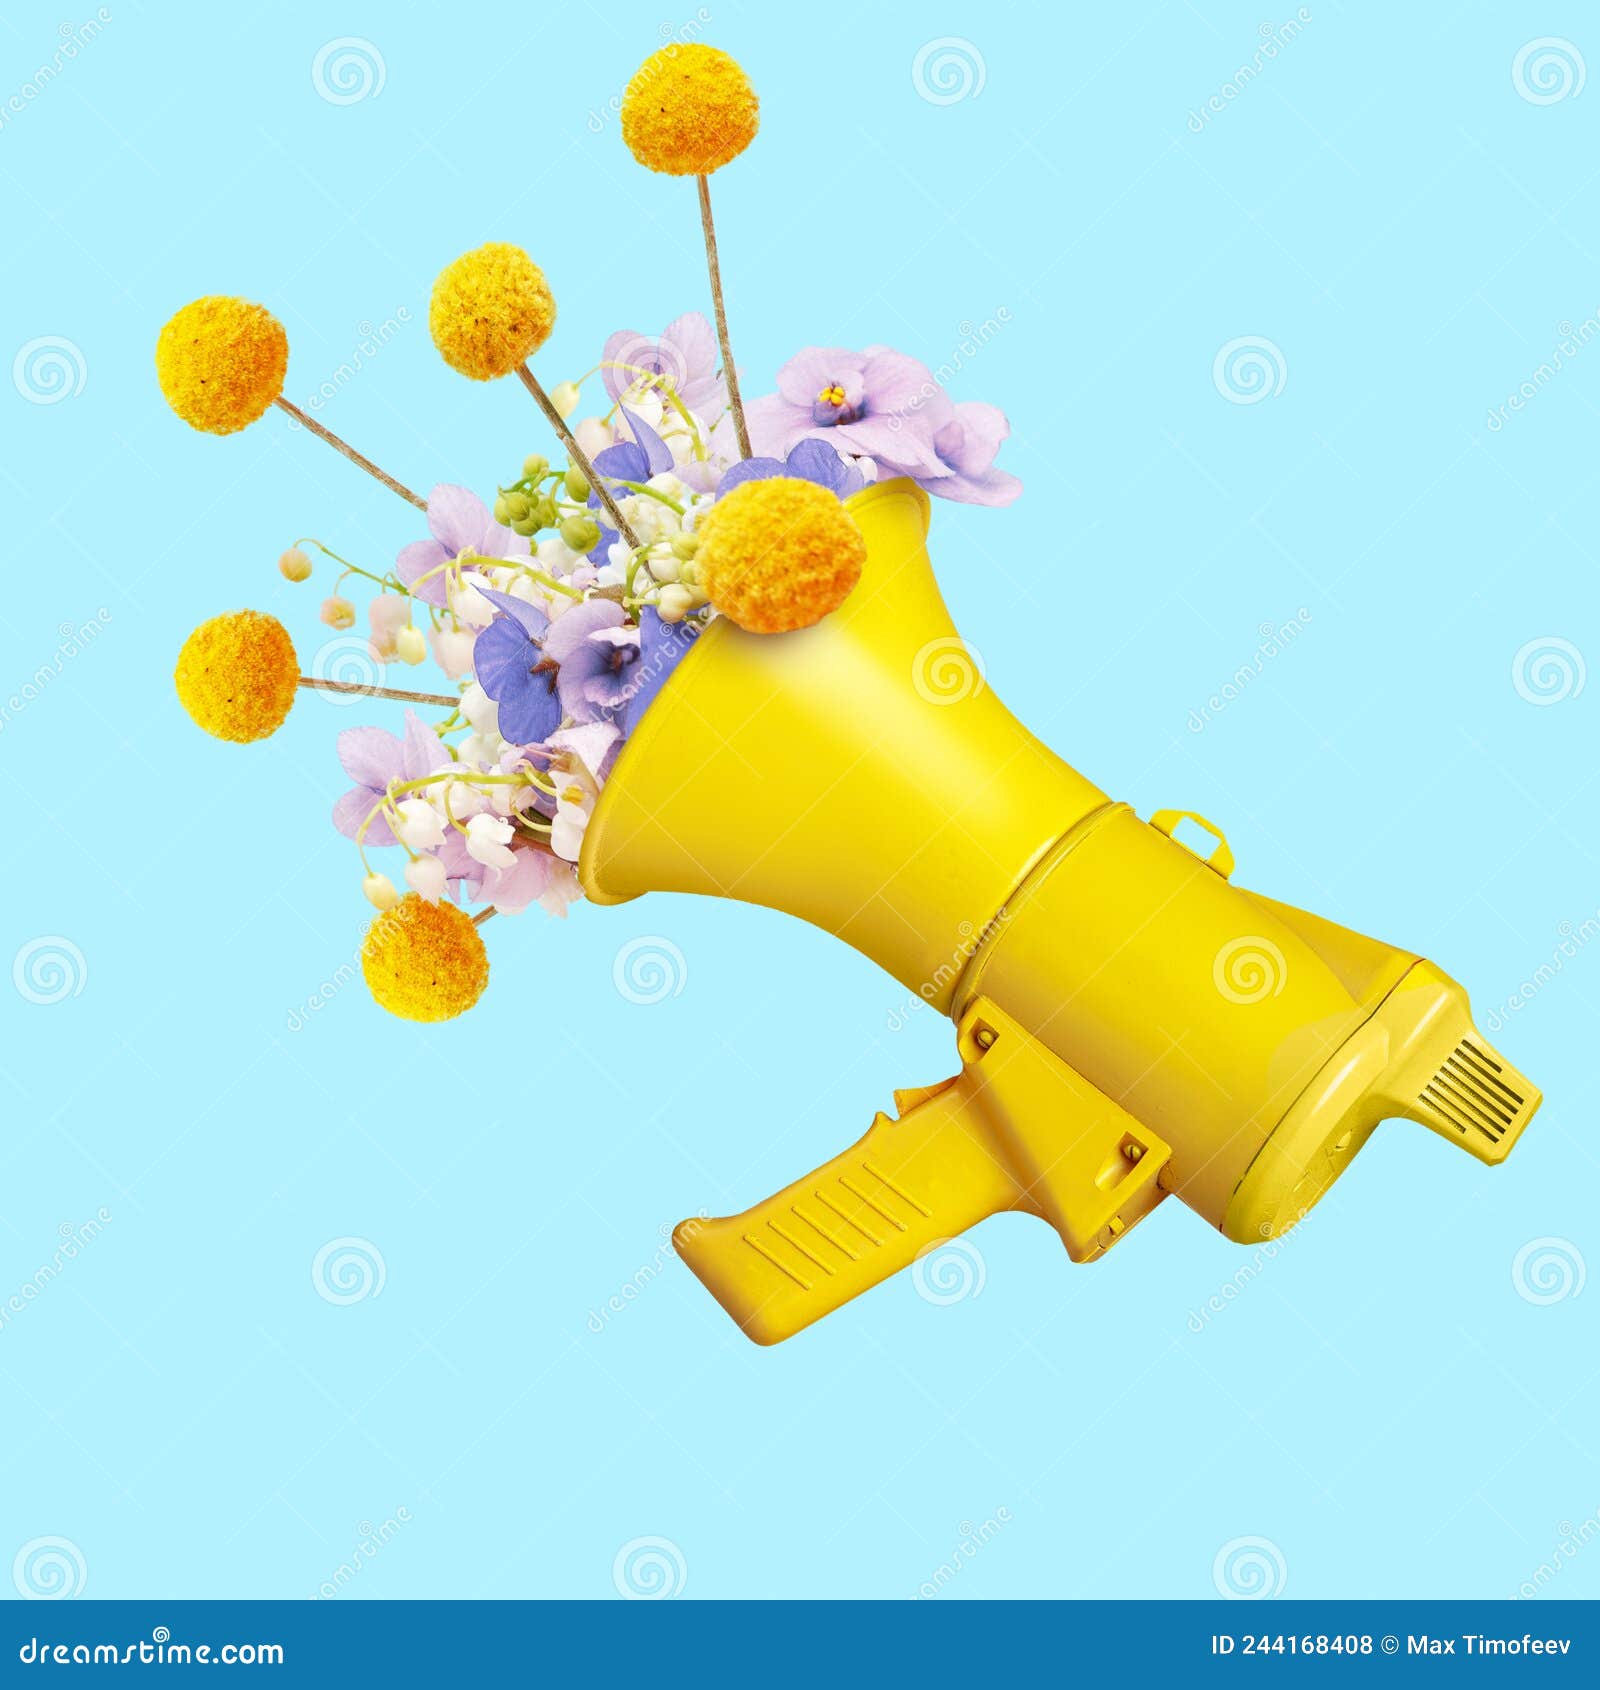 https://thumbs.dreamstime.com/z/flowers-megaphone-bouquet-sticks-out-creative-concept-blue-background-244168408.jpg